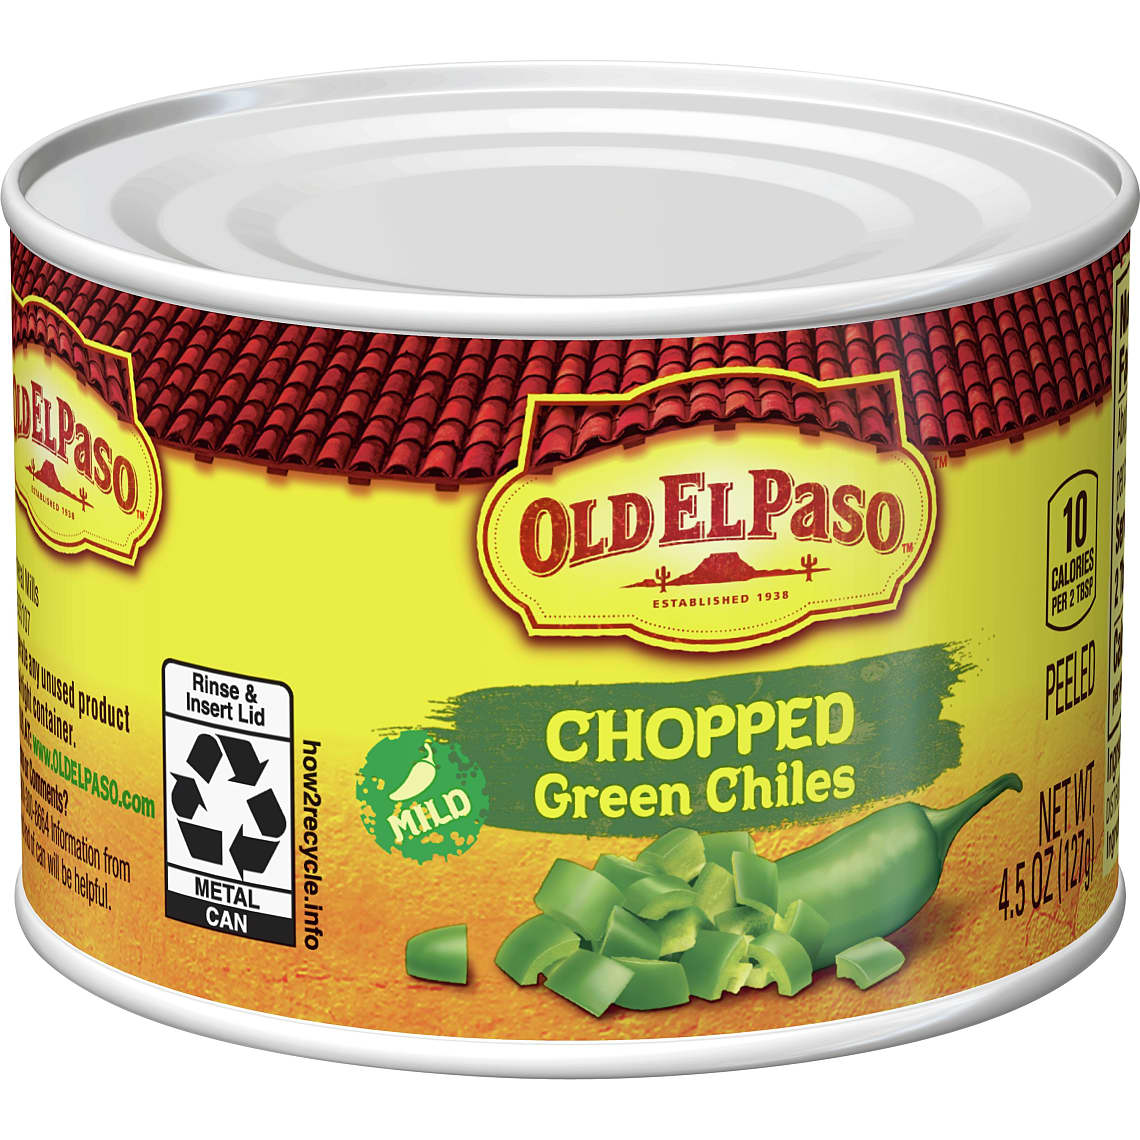 Old El Paso Chopped Green Chiles, 4.5 oz